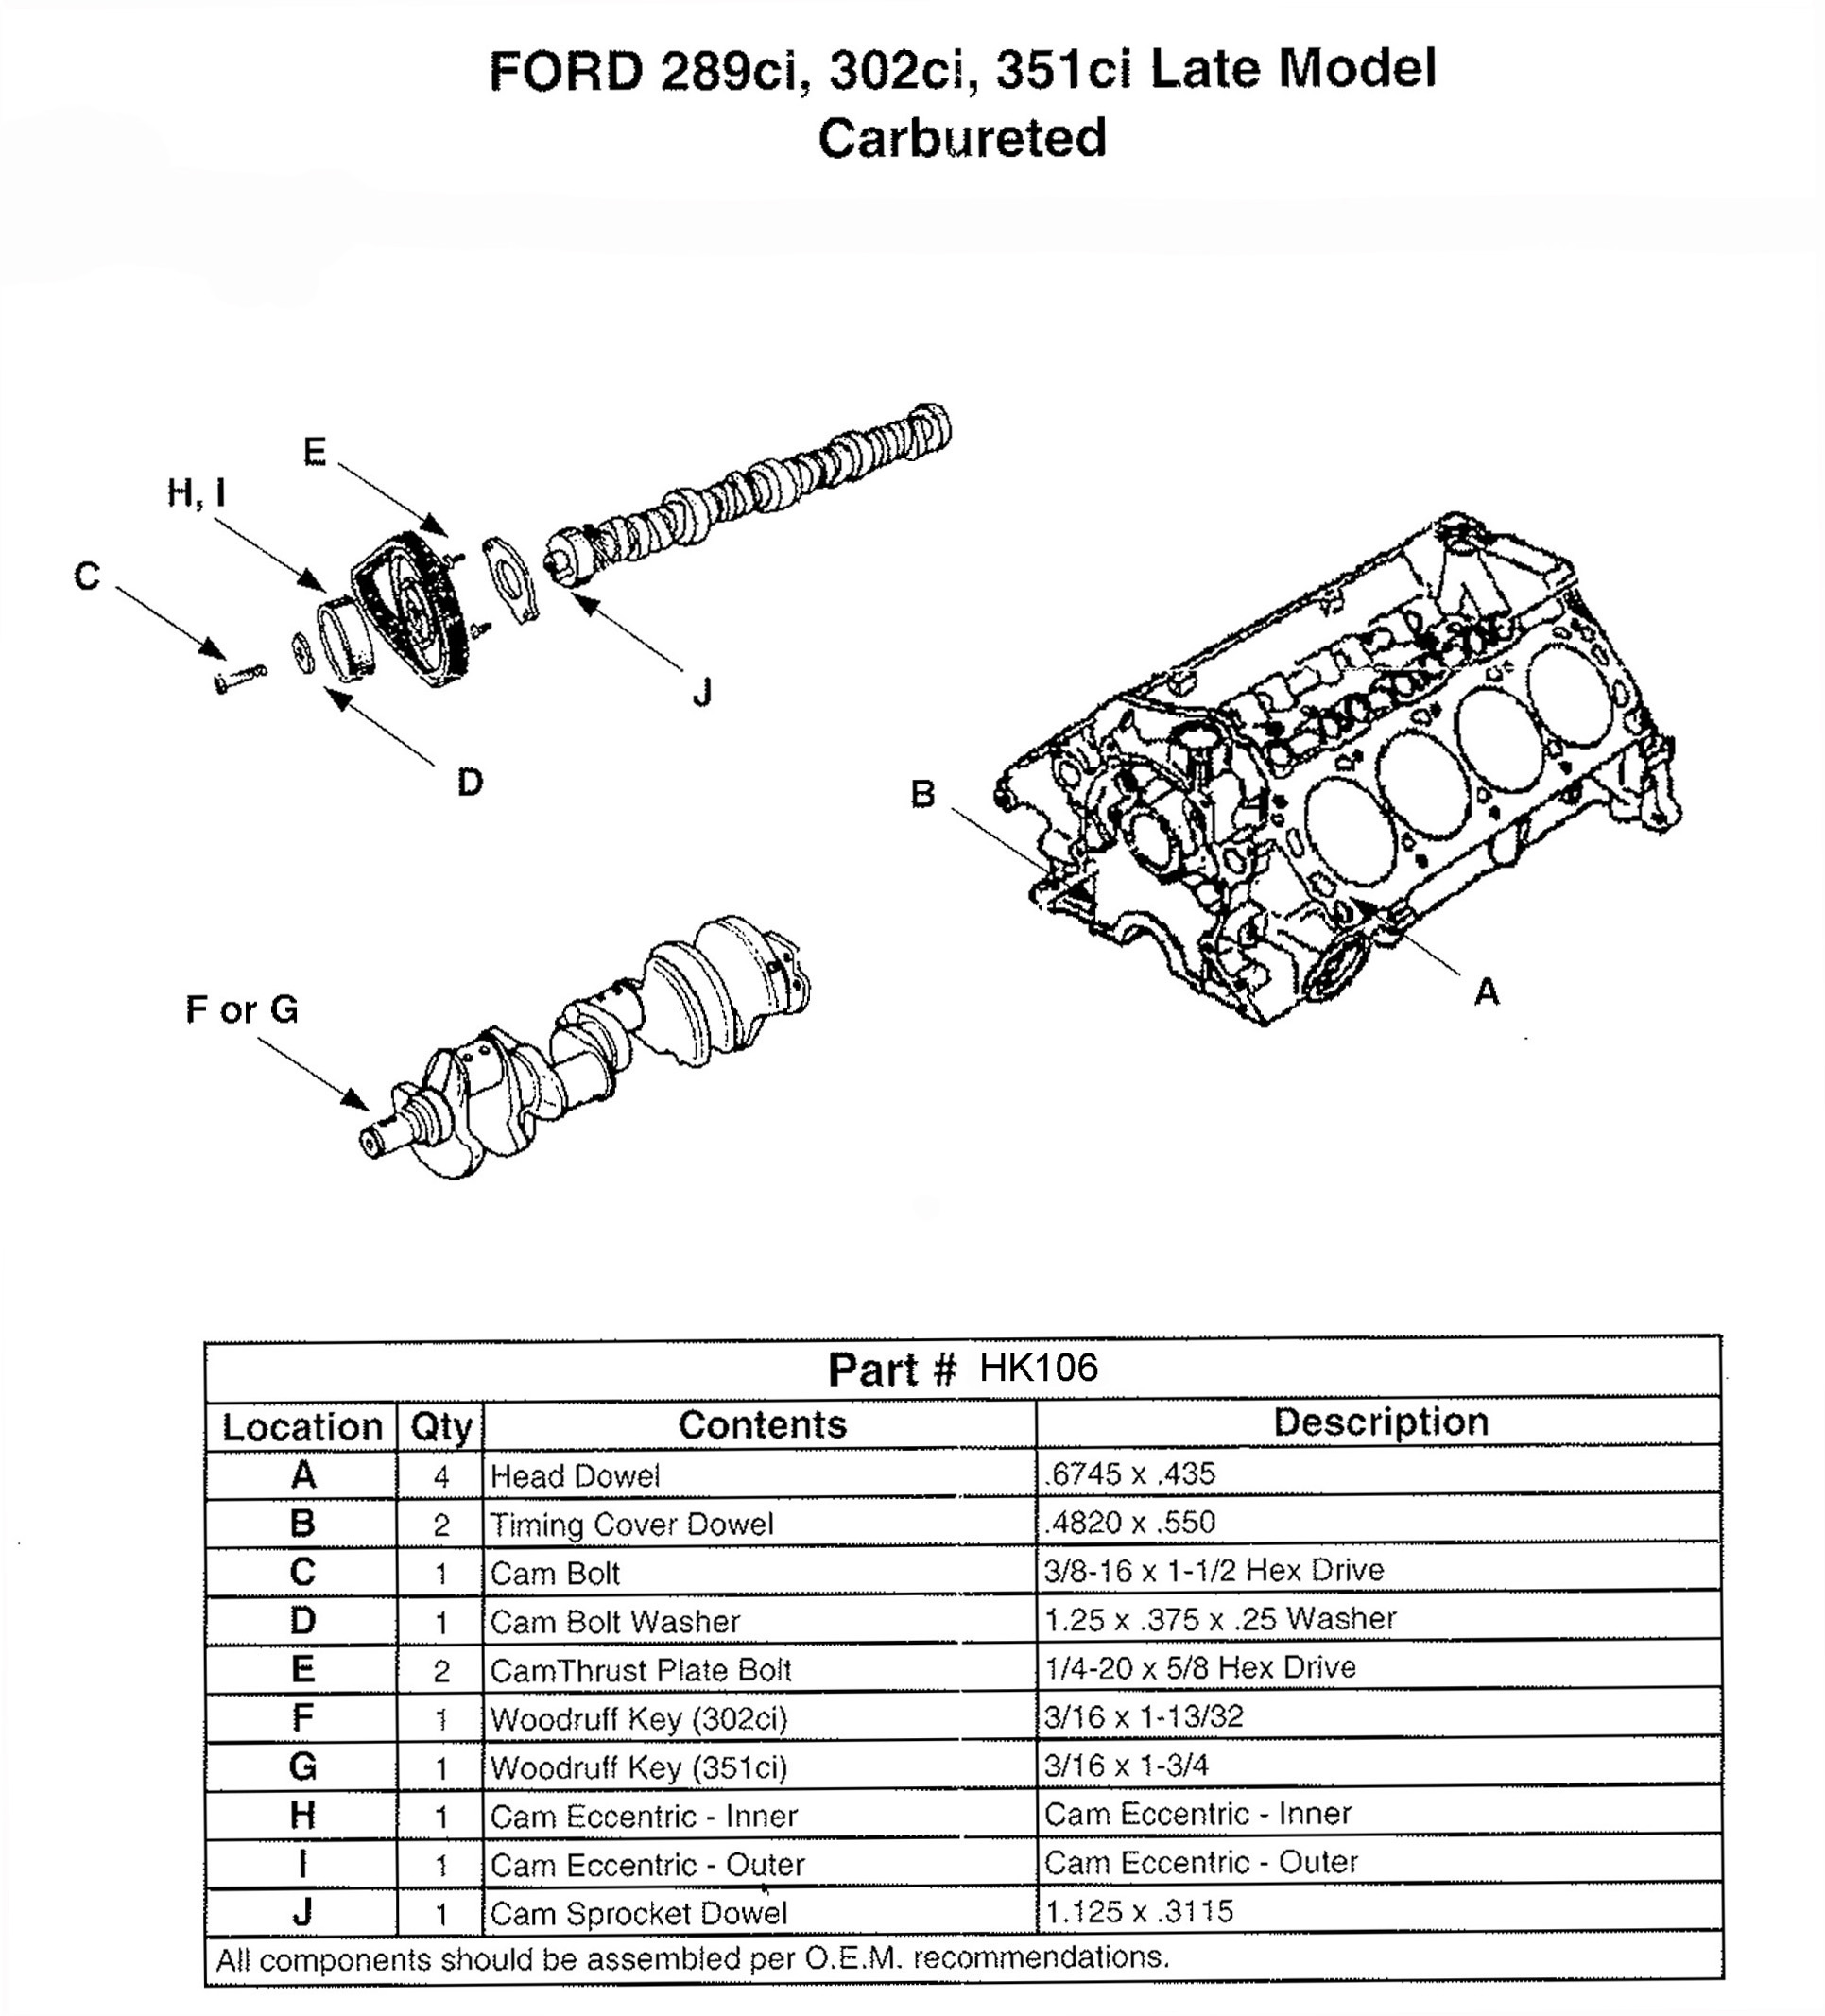 Engine Camshaft Hardware Kit